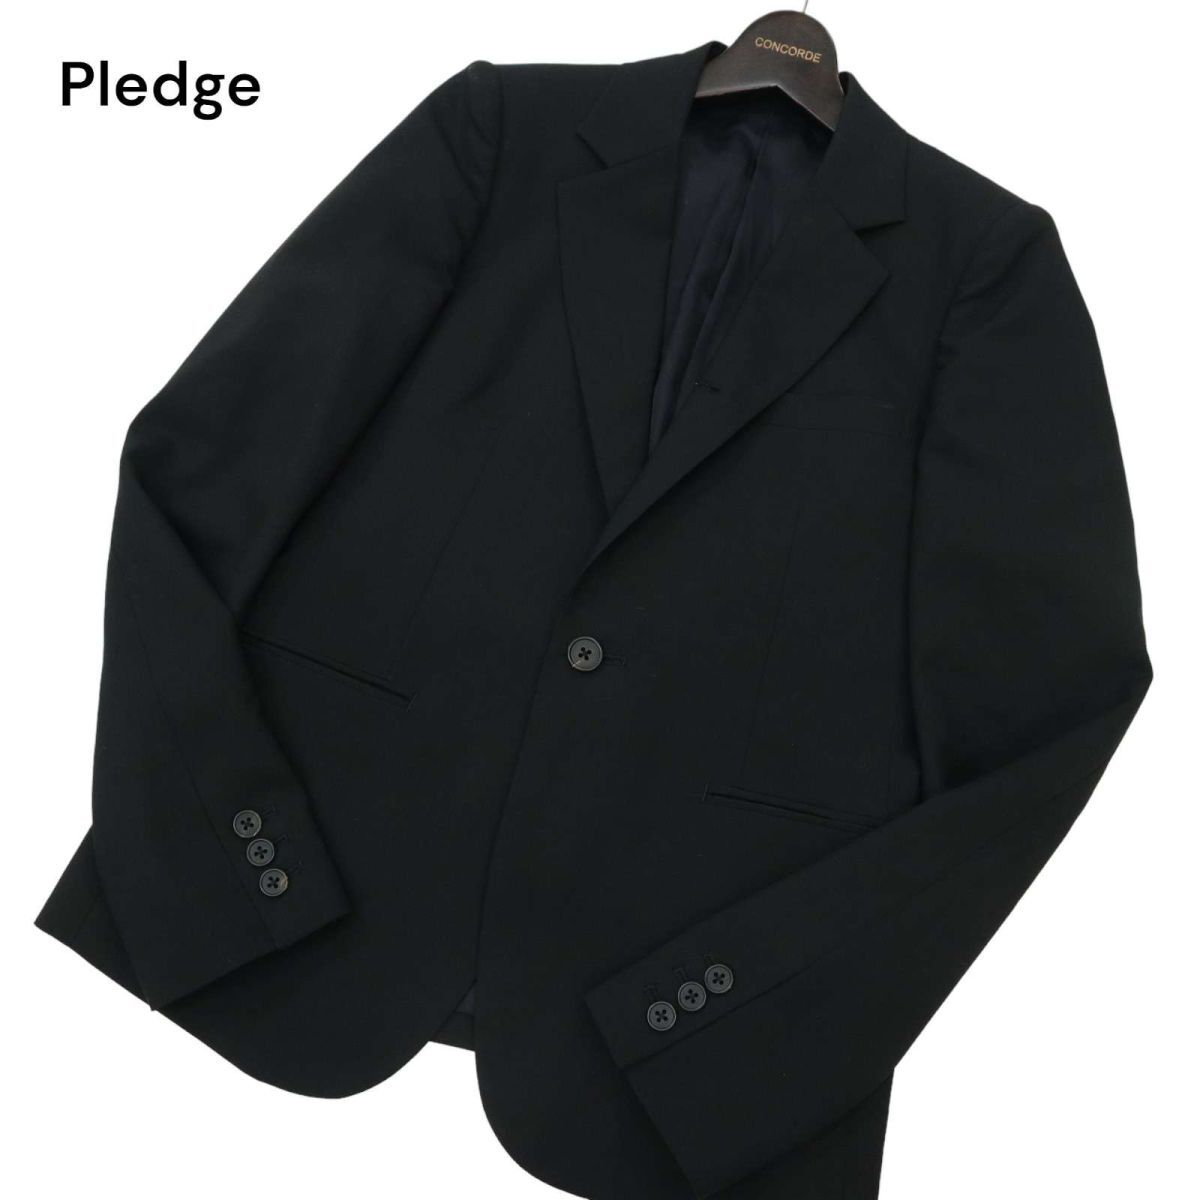 Pledge Pledge through year wool 100%* 1B tailored jacket Sz.46 men's black made in Japan C4T02732_3#O